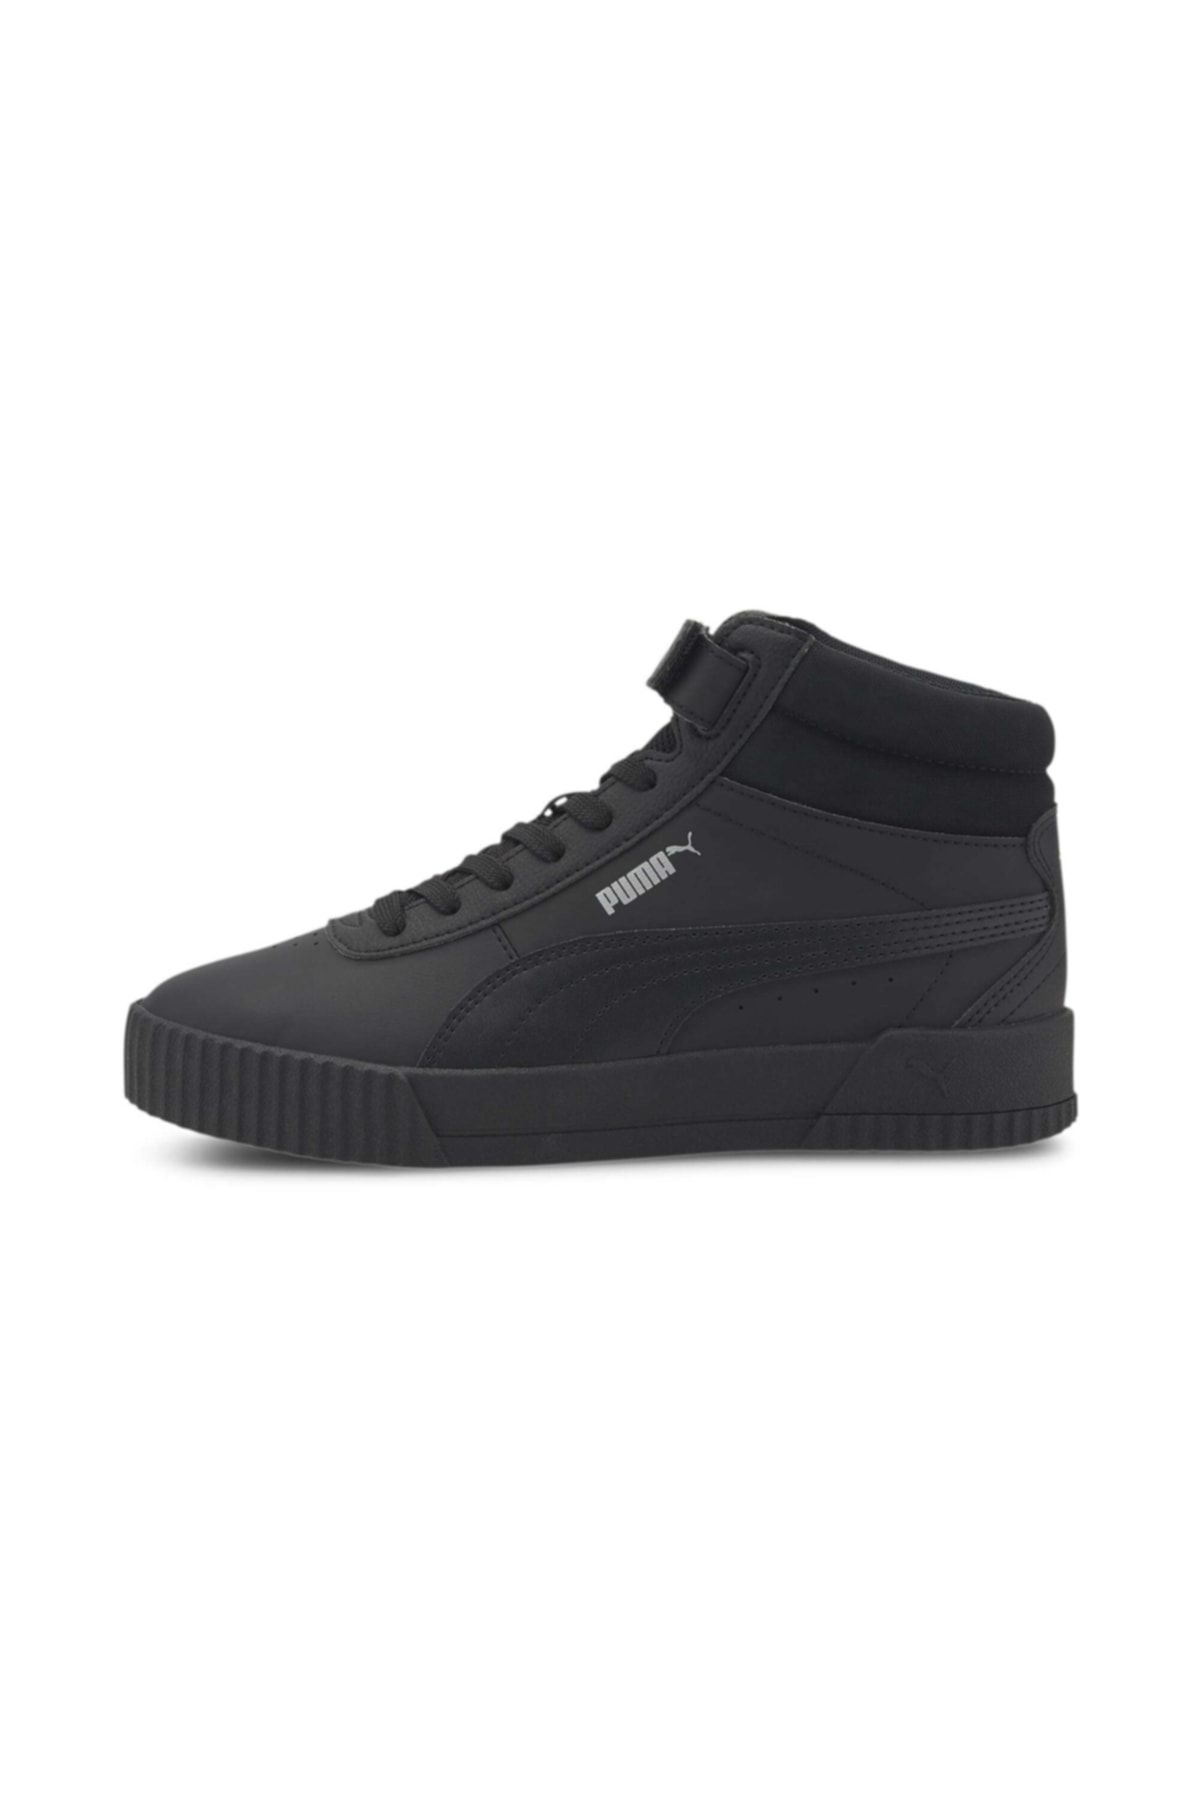 Puma CARINA MID Siyah Kadın Sneaker Ayakkabı 101119317